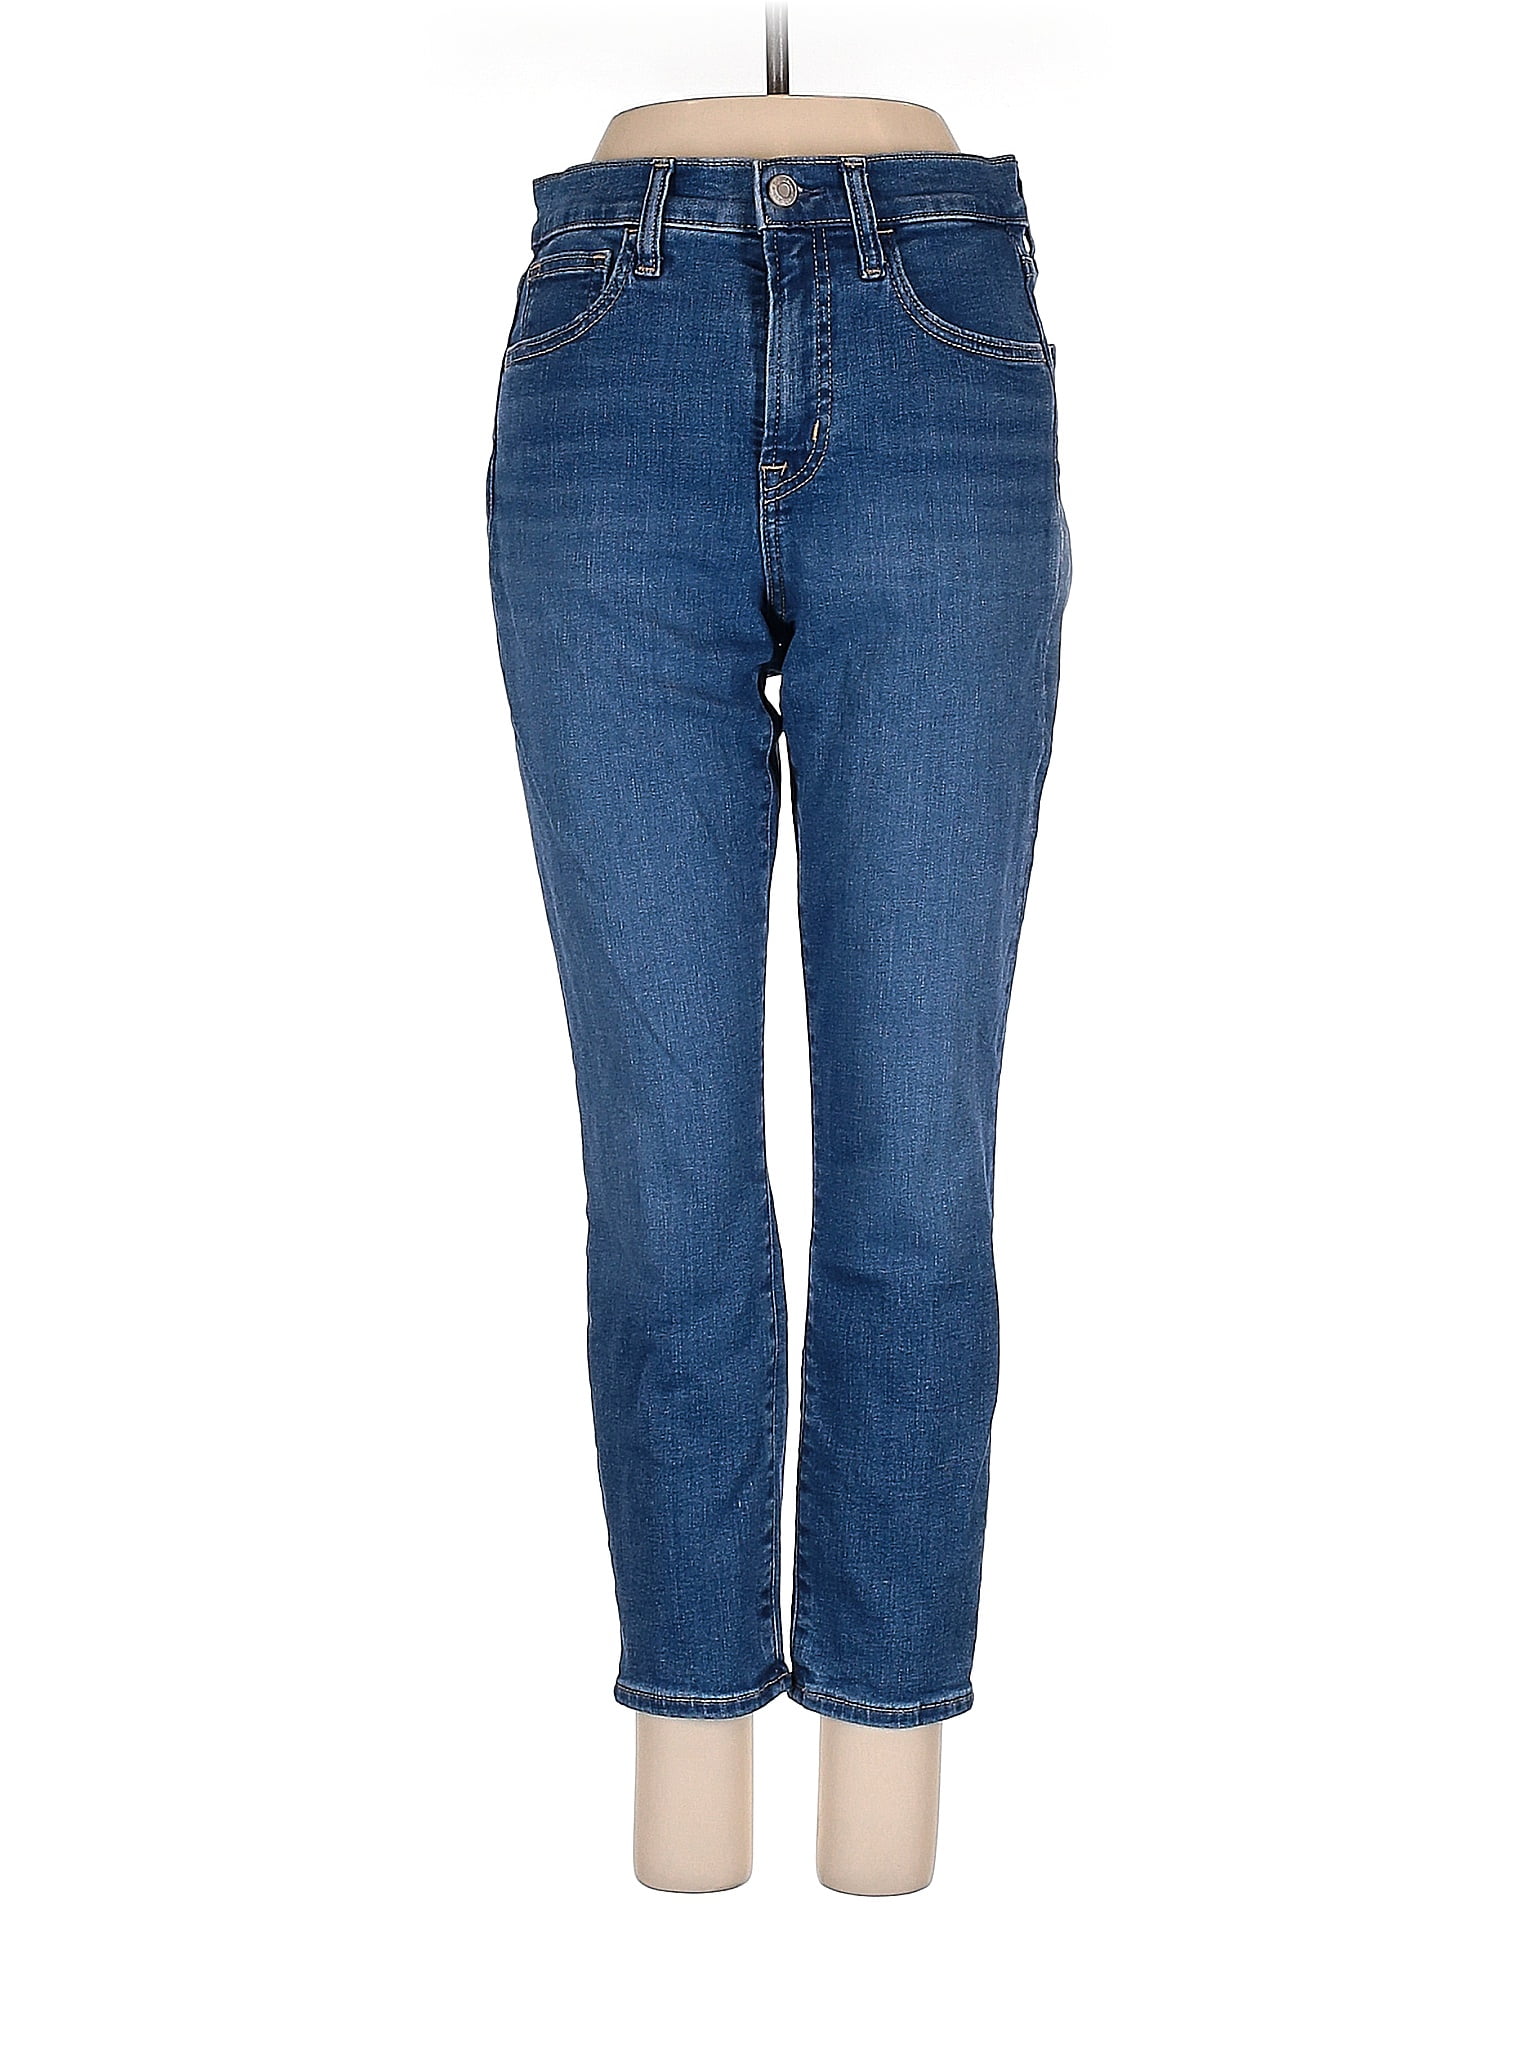 Gap Solid Blue Jeans Size 4 (Petite) - 77% off | thredUP